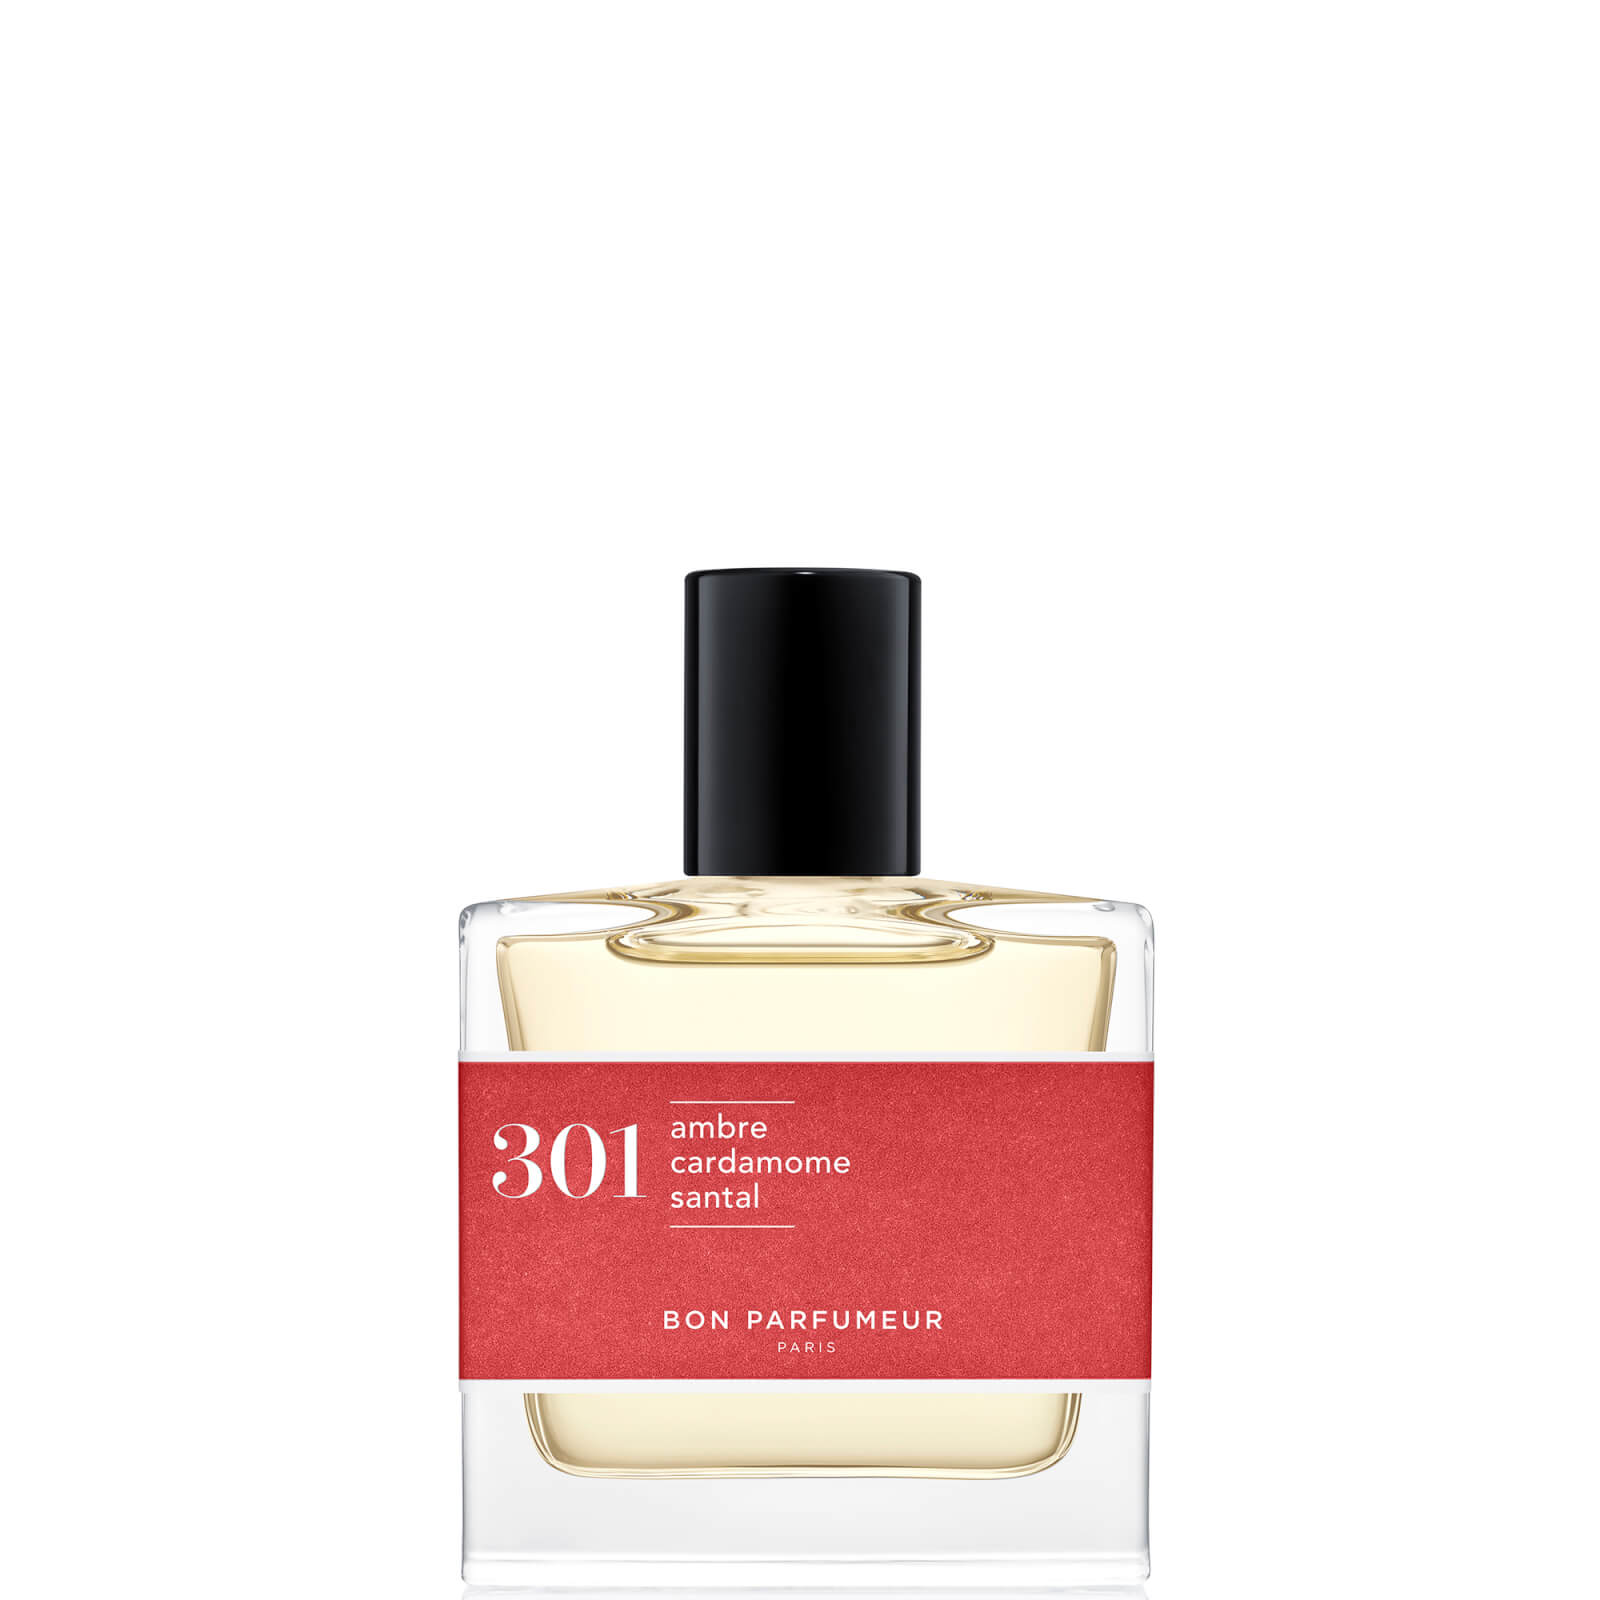 bon-parfumeur-woody-oriental-nr-301-sandelholz-ambra-kardamom-30-ml